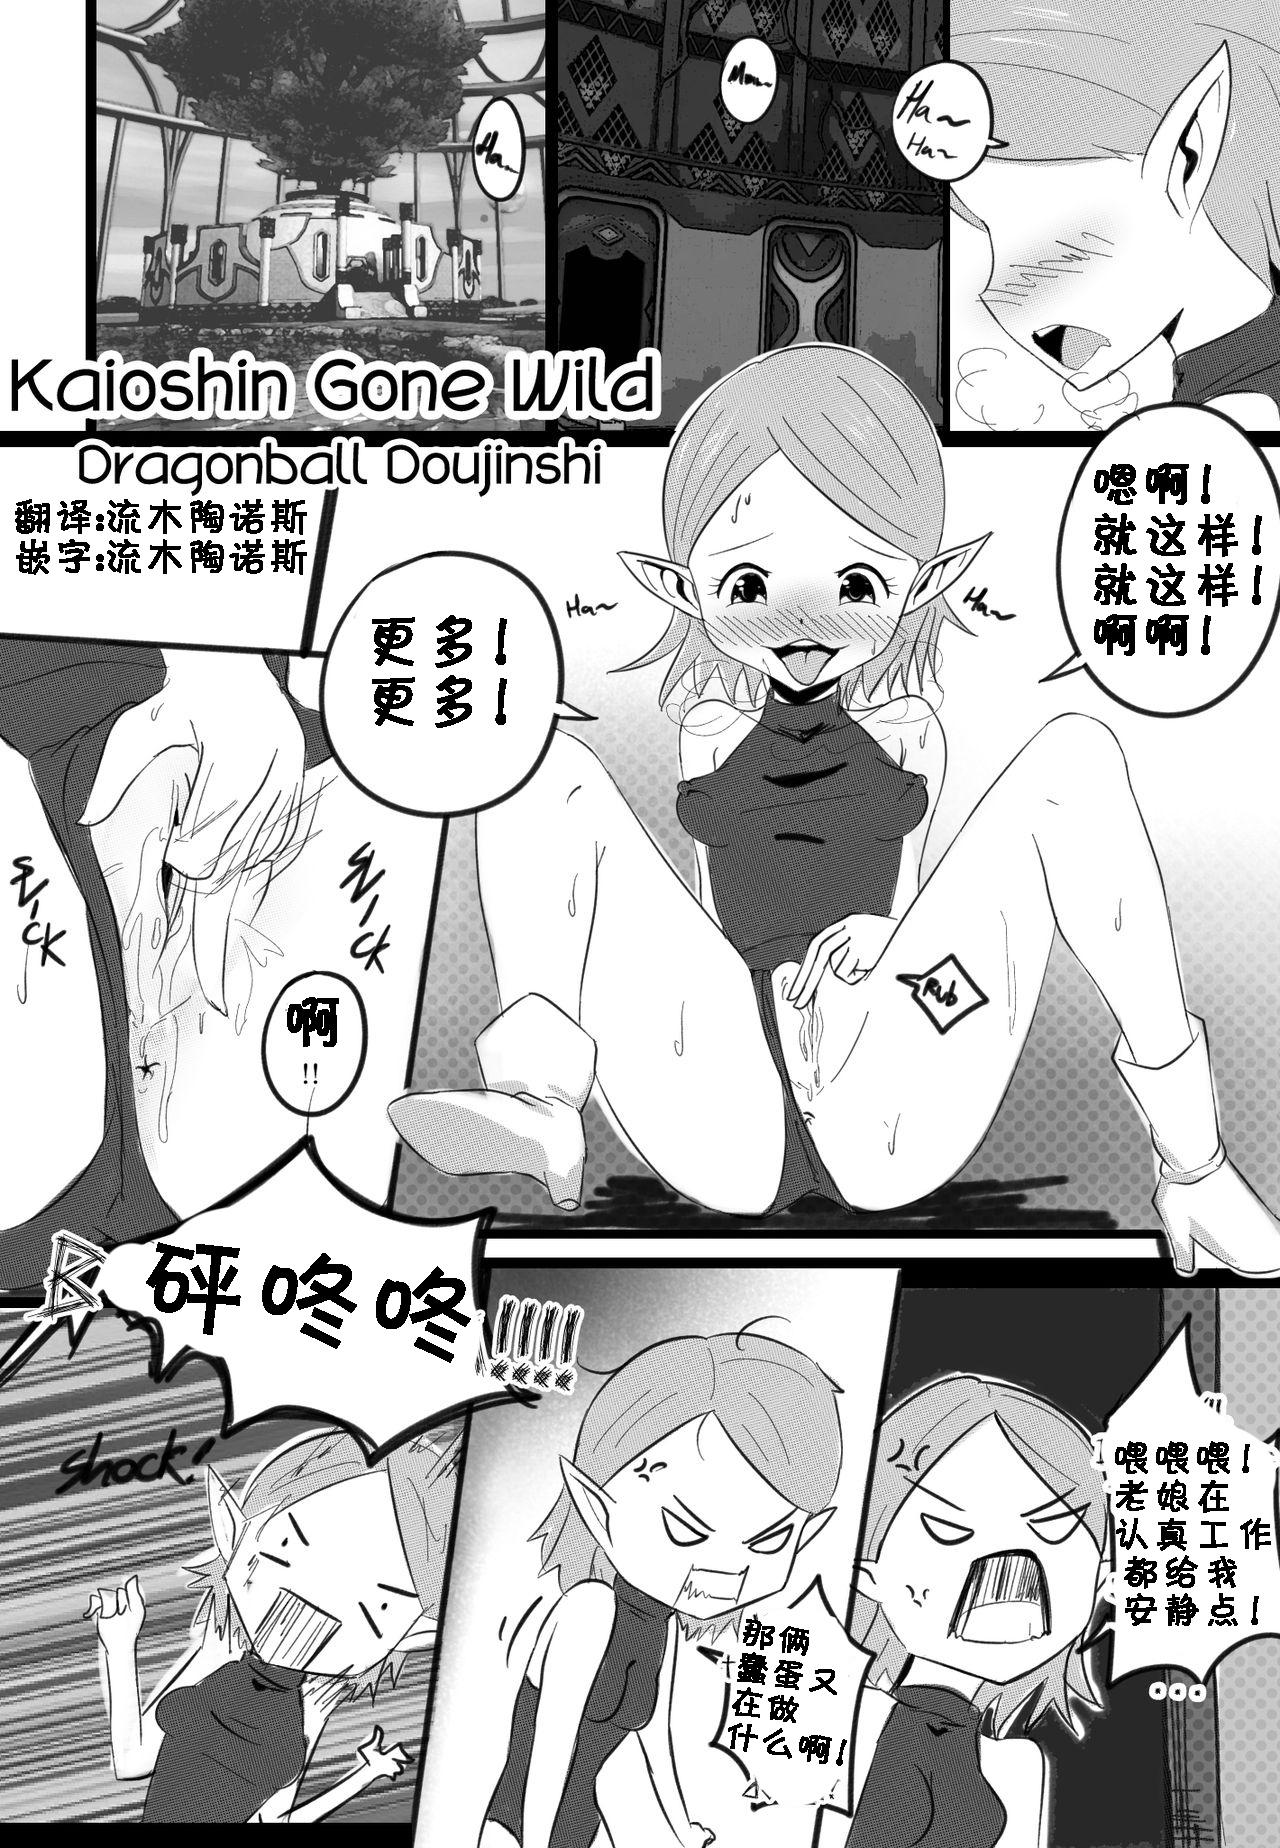 Village KAIOSHIN GONE WILD - Dragon ball z Women Sucking Dick - Page 4